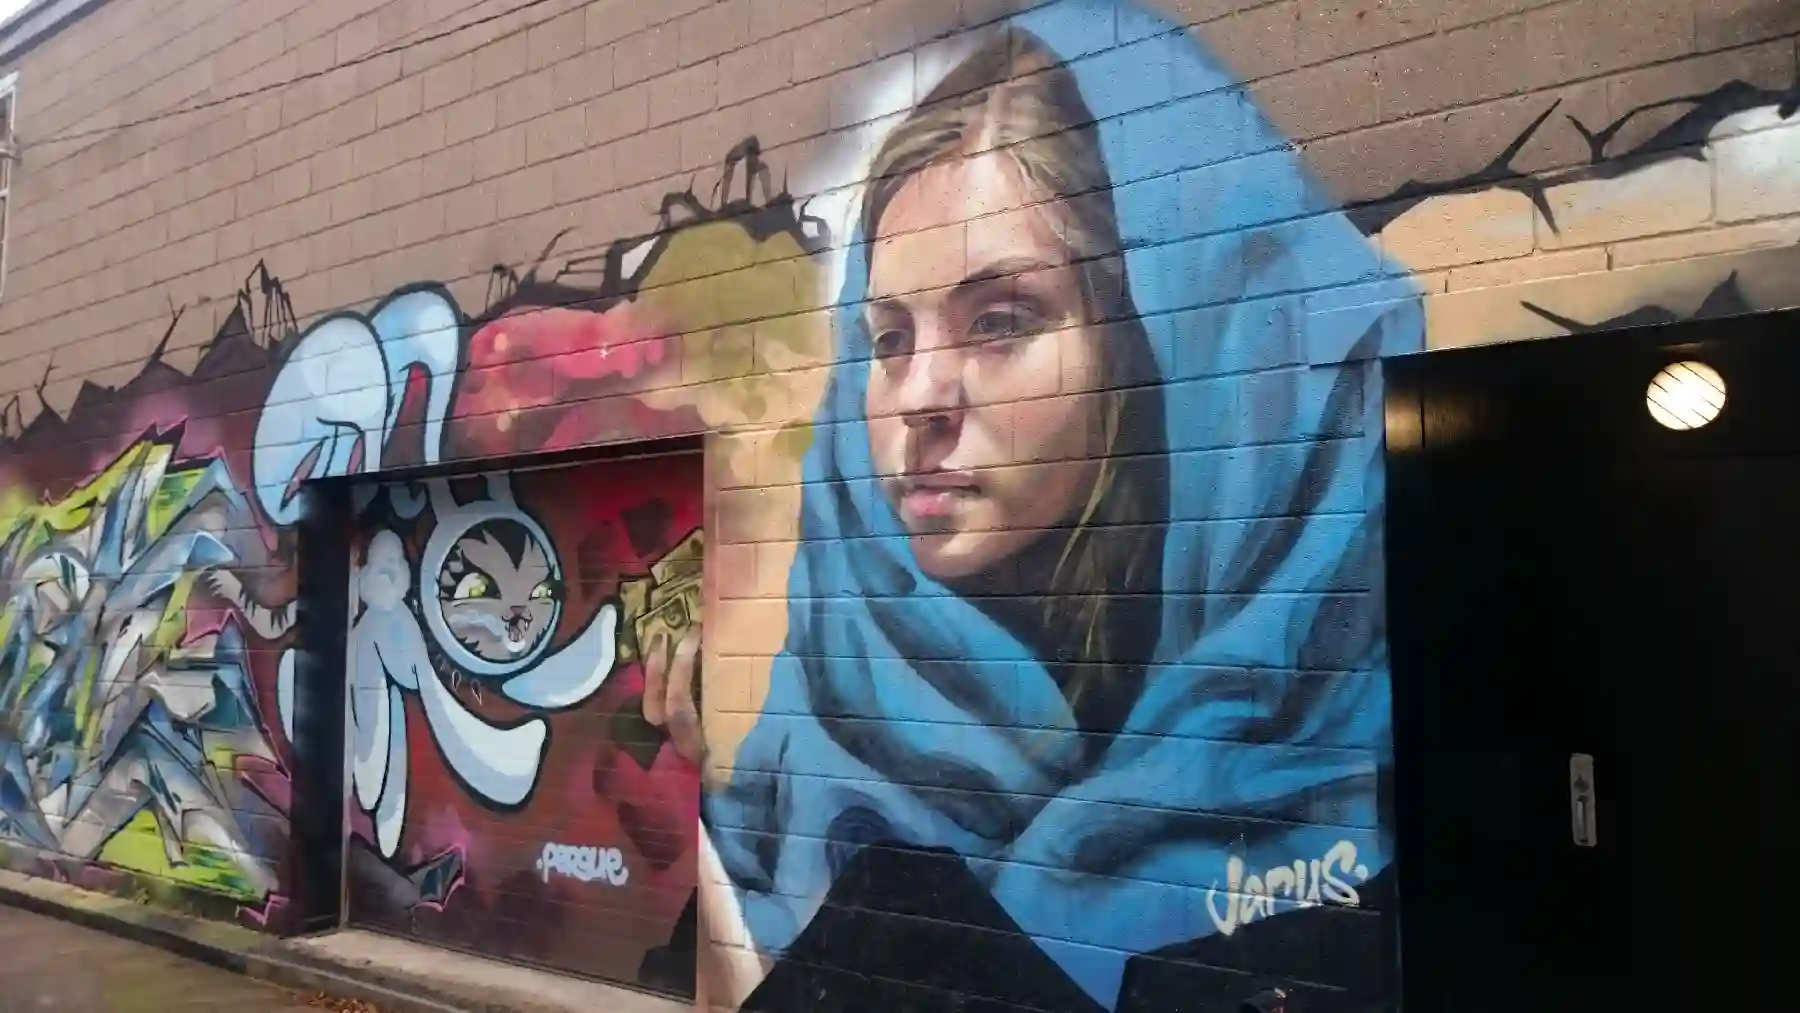 Canadian Graffiti Street Art